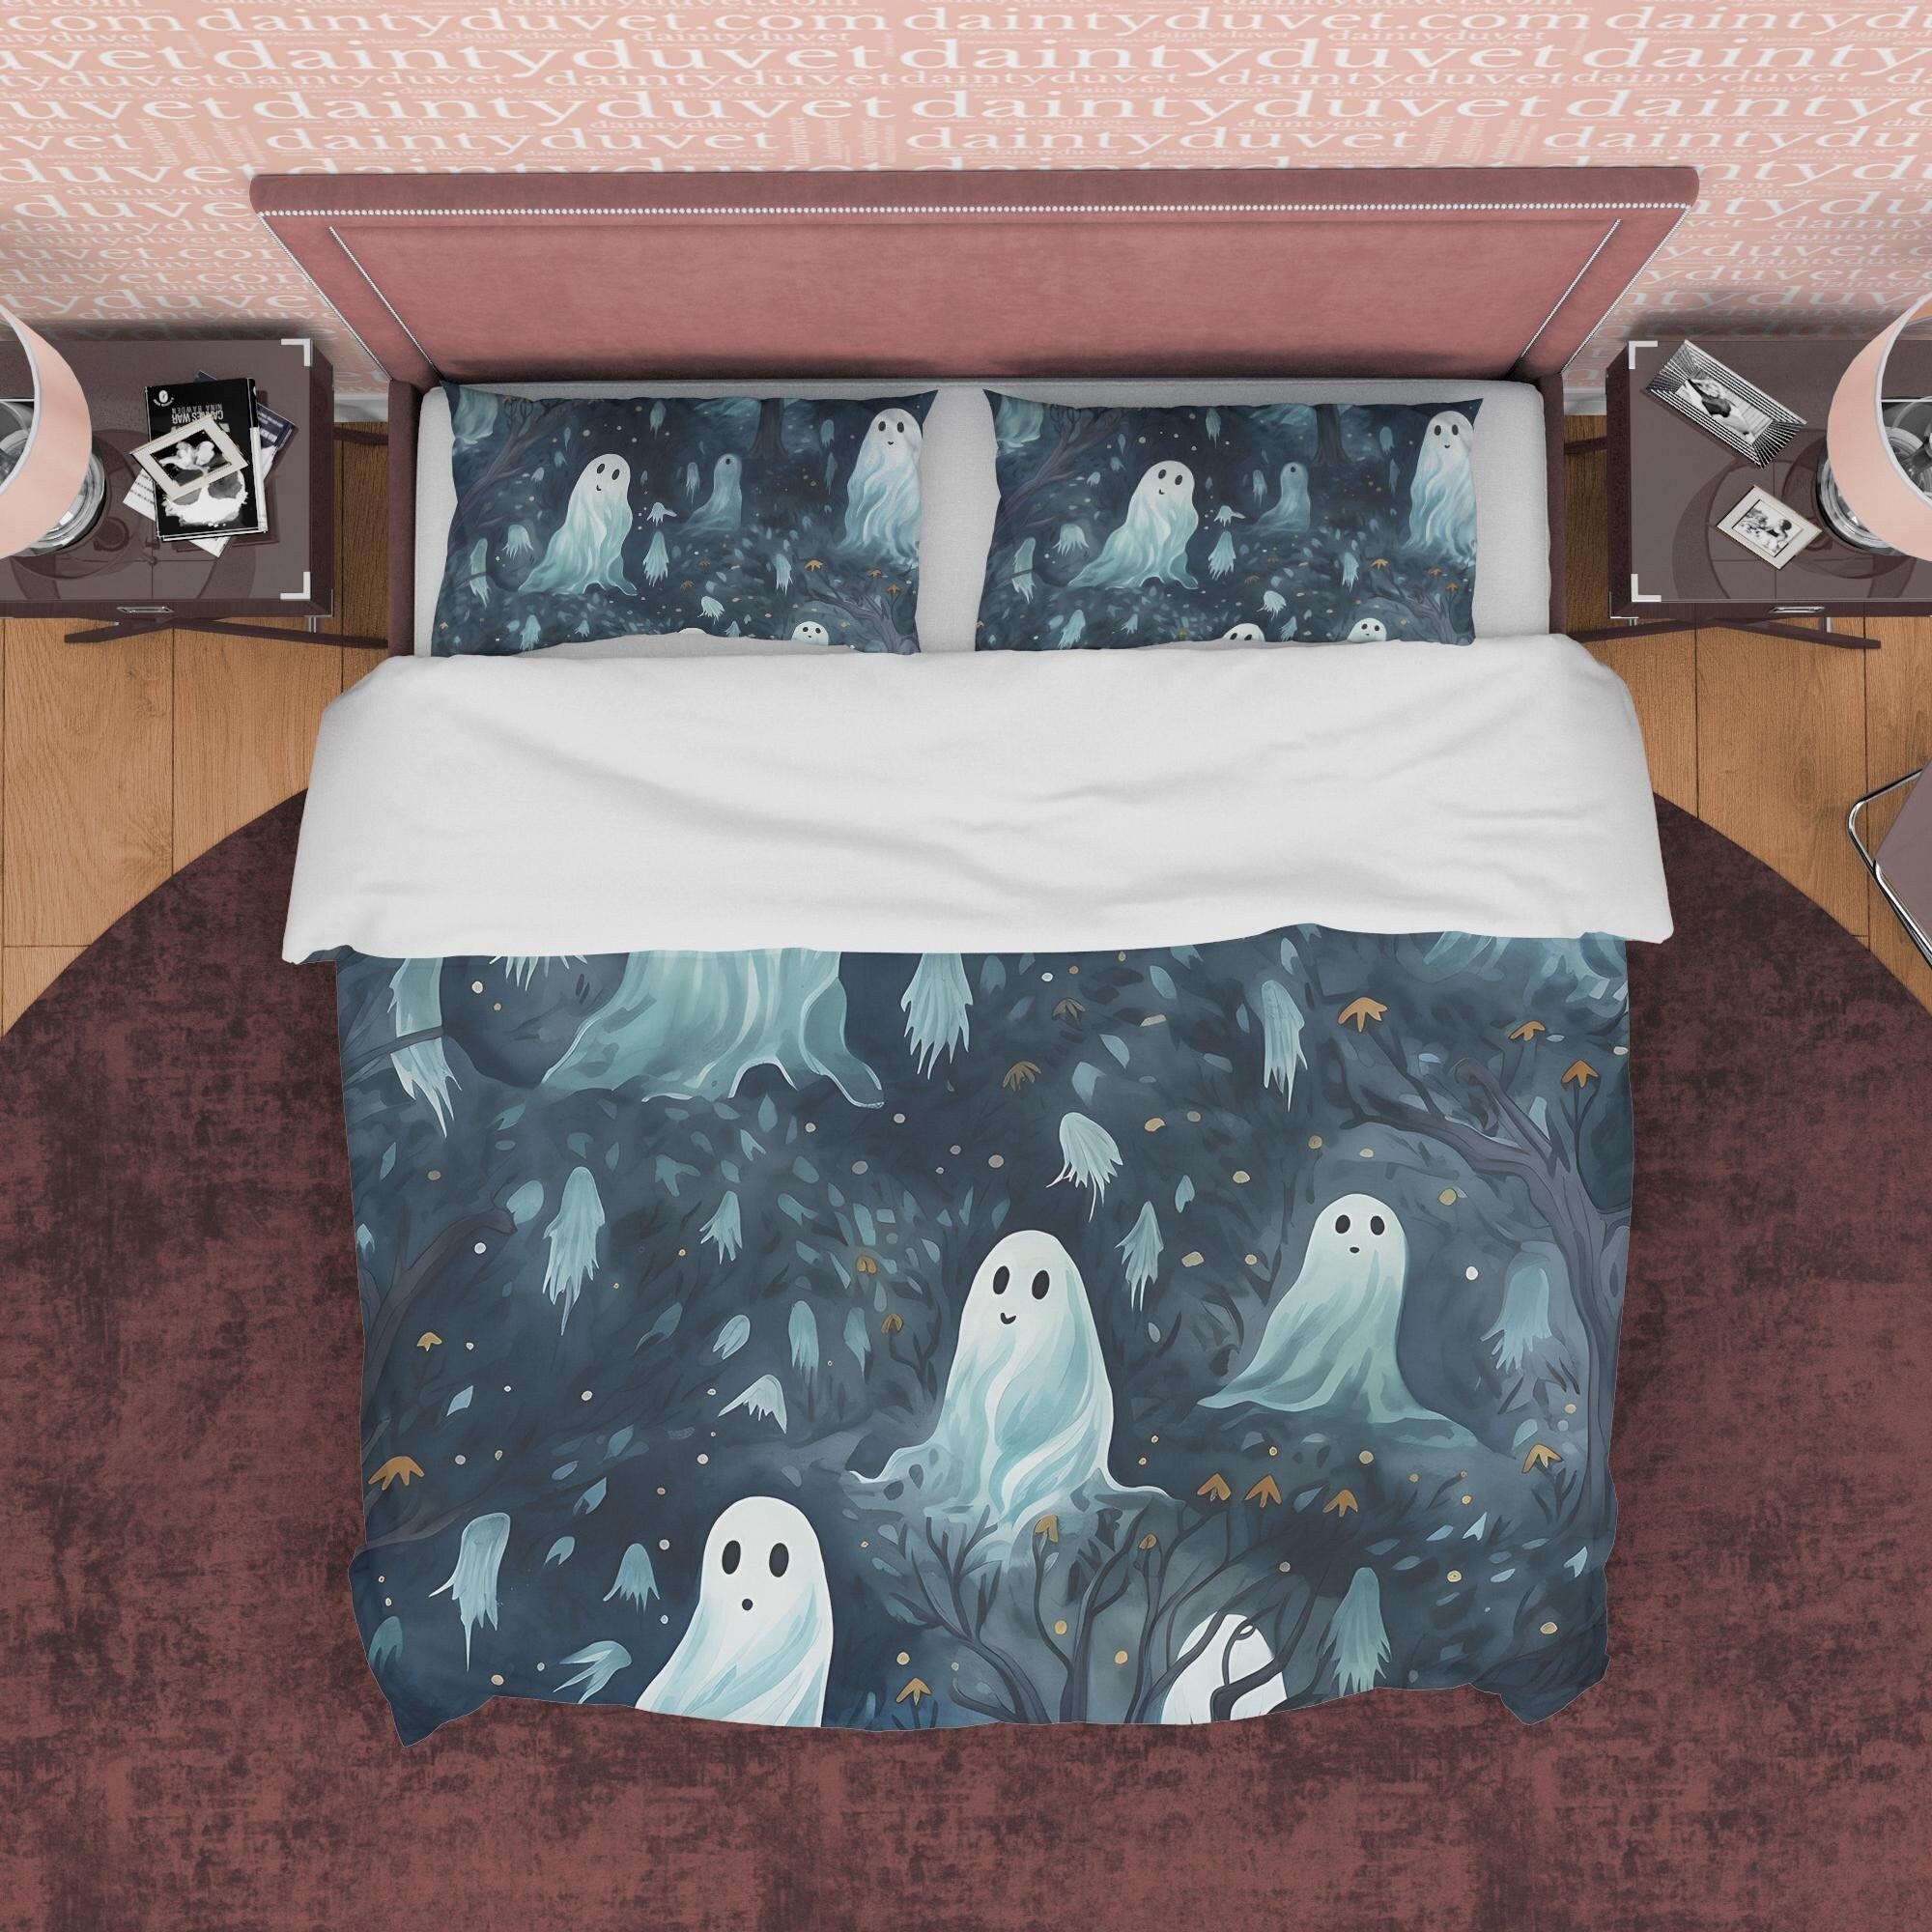 Scary Ghost Duvet Cover Set, Haunted Forest Bedding, Dark Spooky Blanket Cover Aesthetic Zipper Bedding, Halloween Night Room Decor